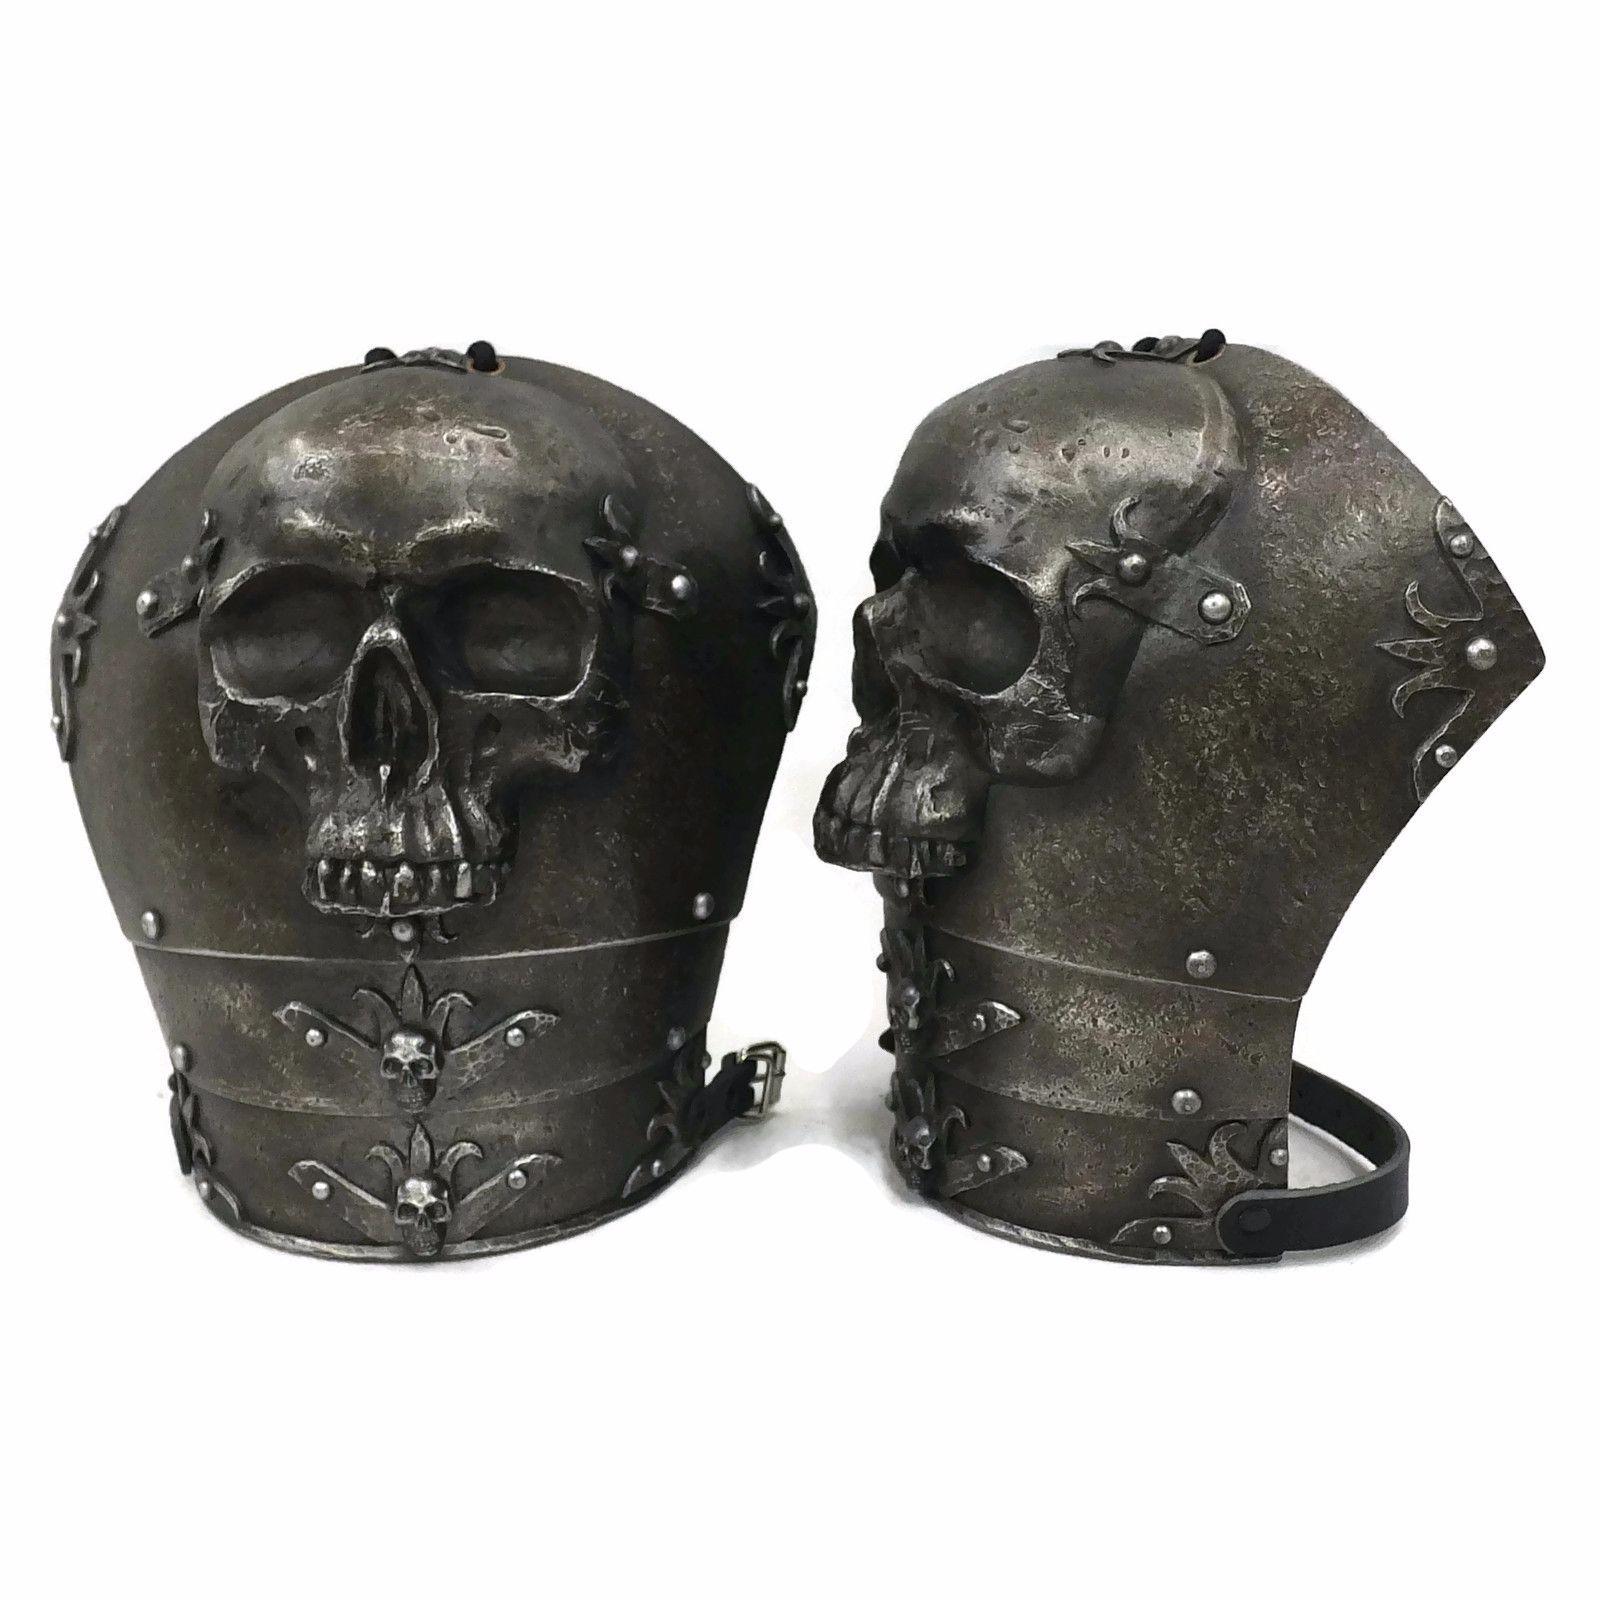 Skull design shoulders for larp